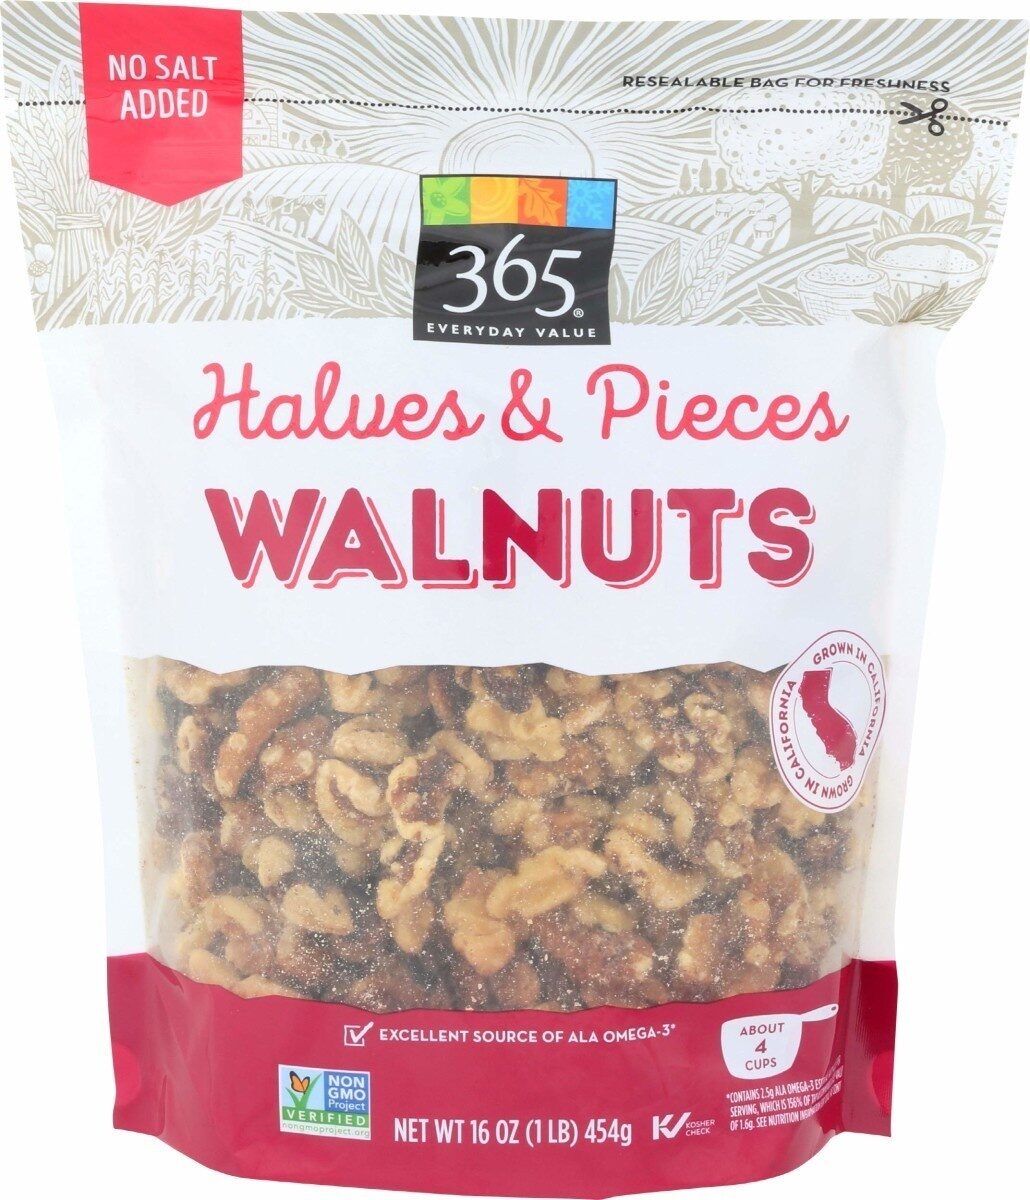 Walnuts halves & - Product